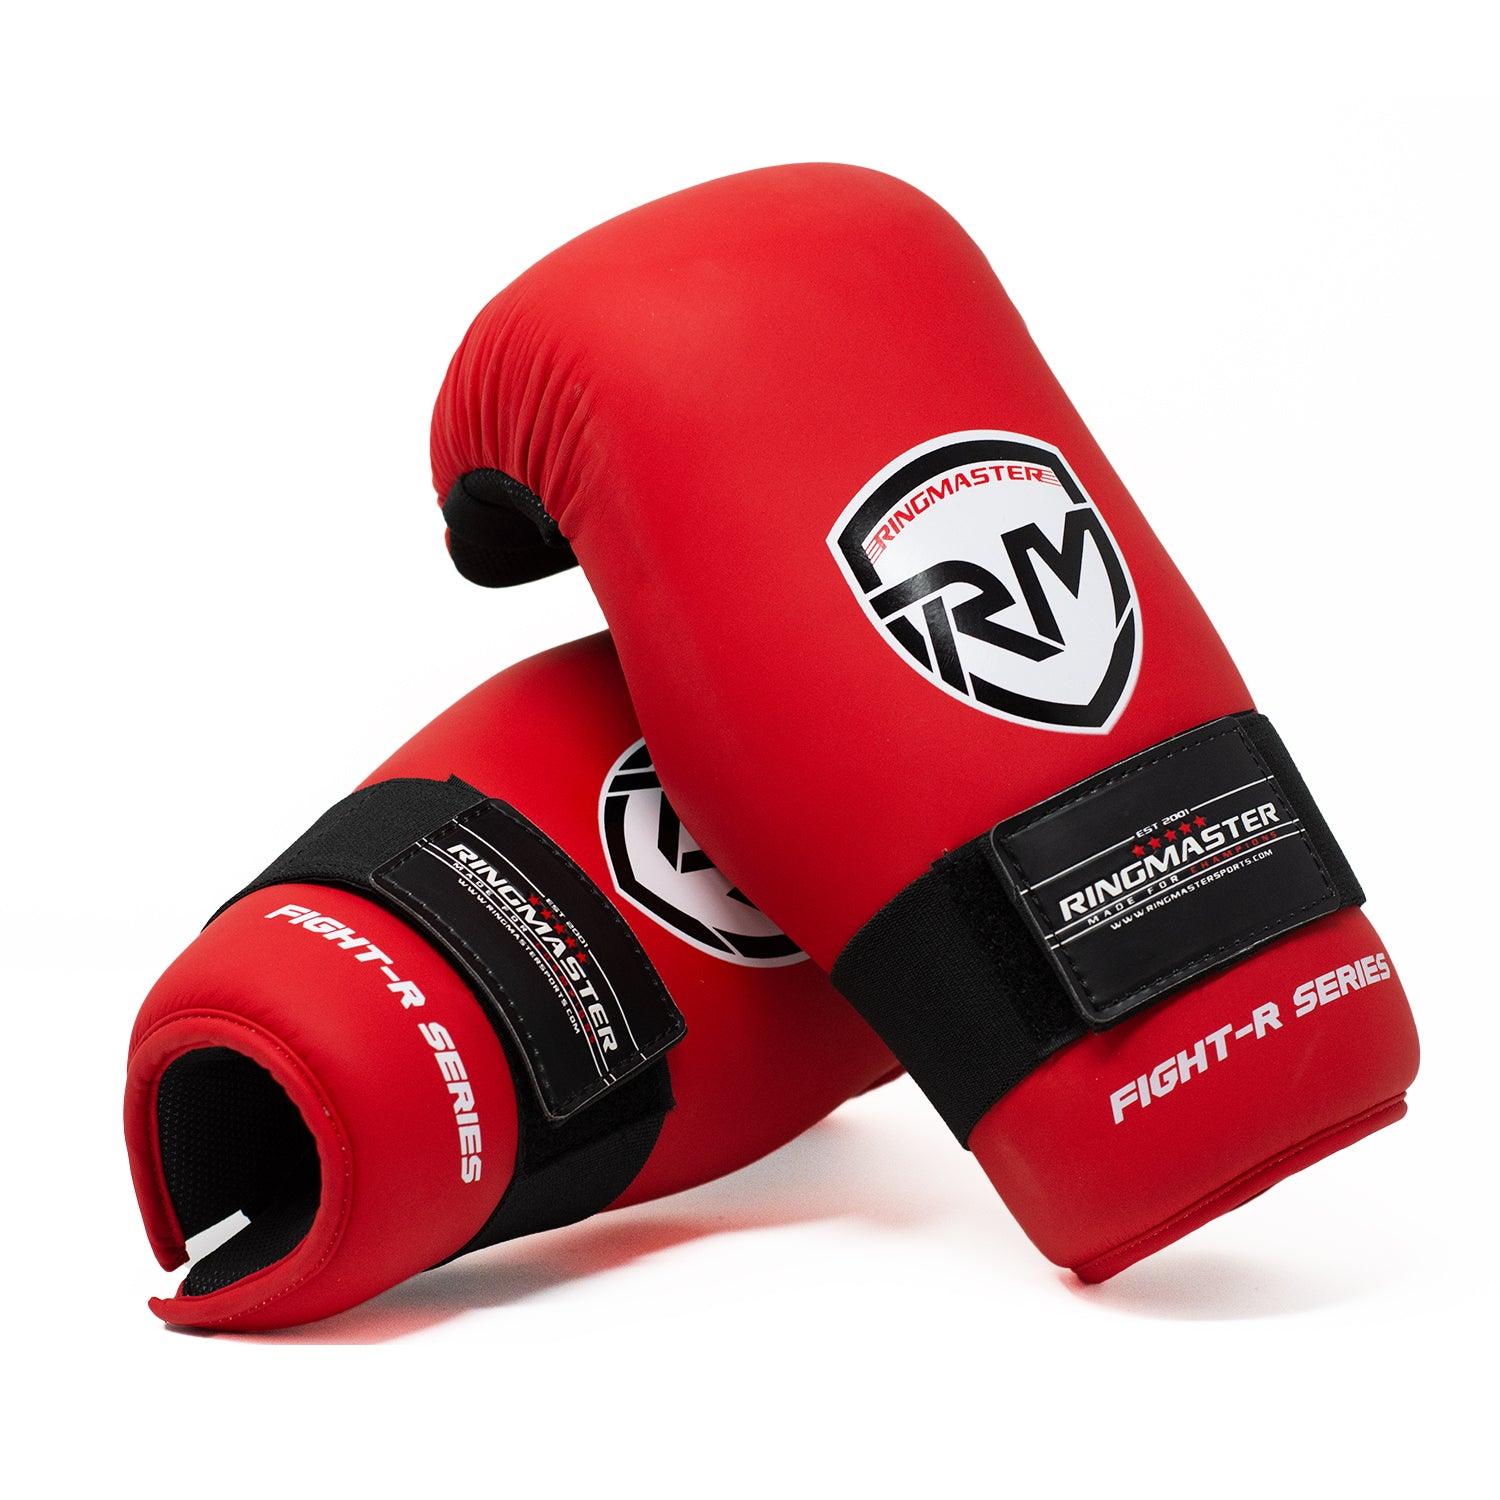 RingMaster Sports Semi Contact Point Gloves Taekwondo Kickboxing Red - RINGMASTER SPORTS - Made For Champions